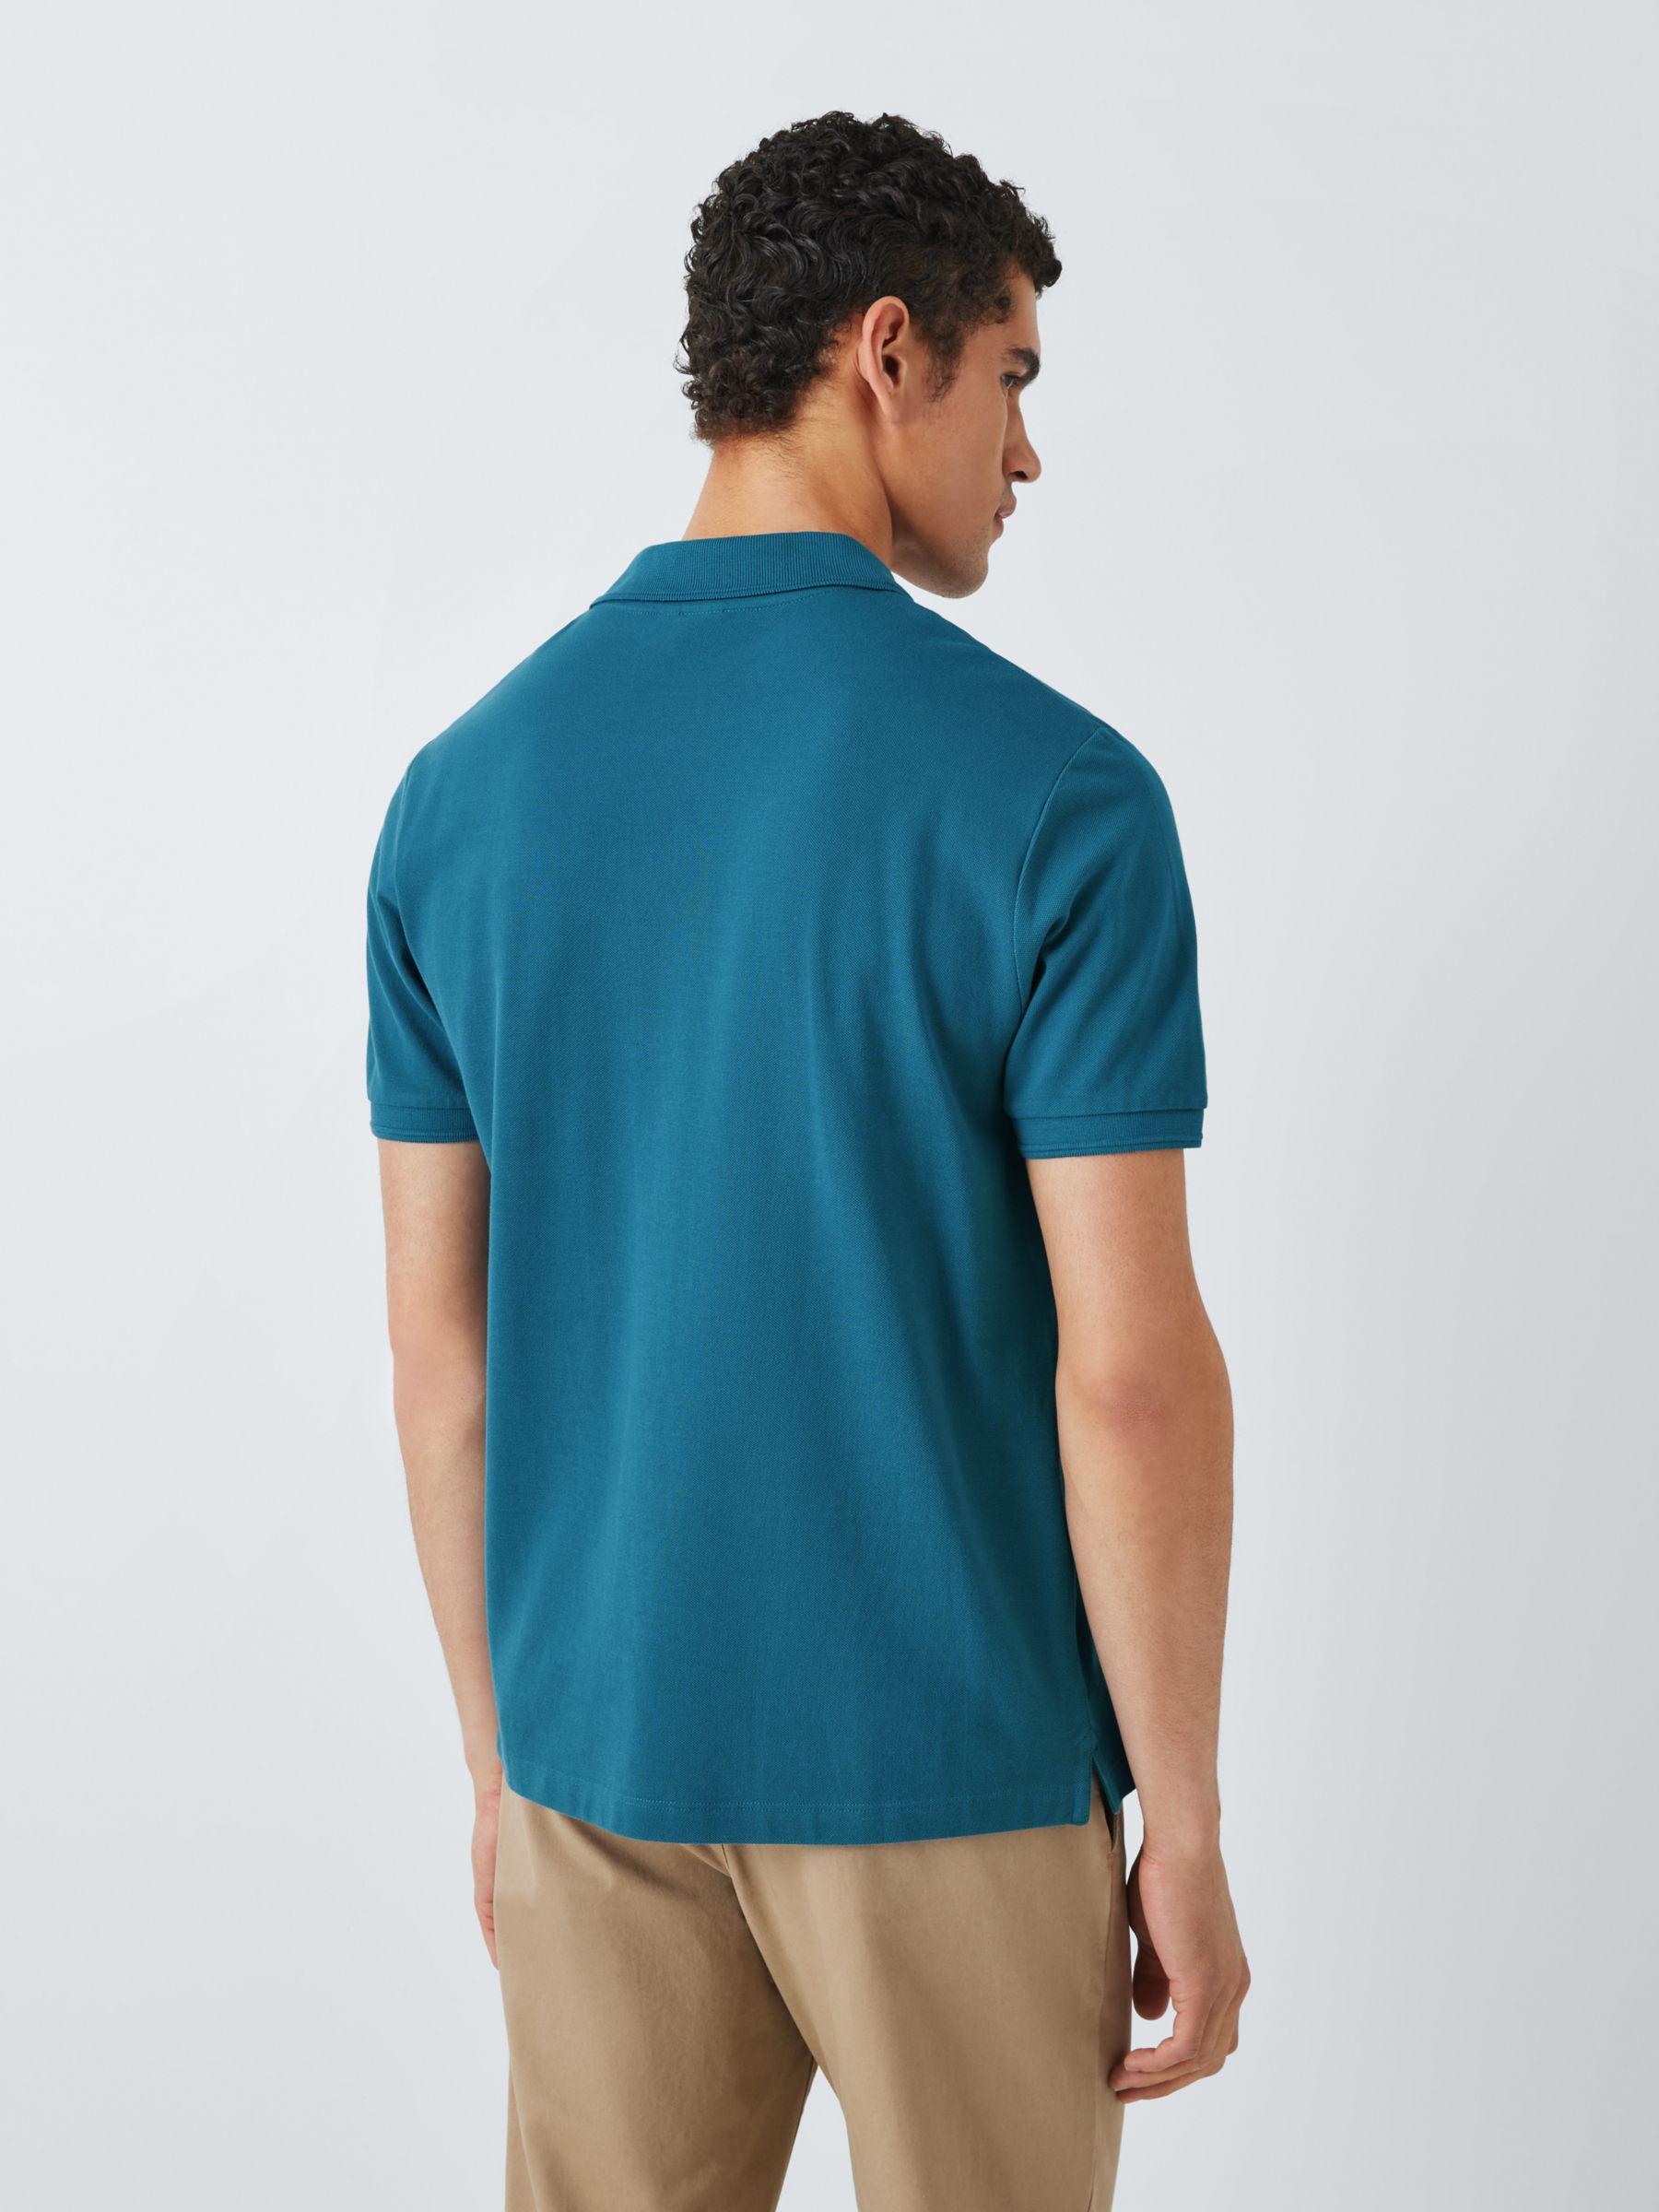 John Lewis Supima Cotton Jersey Polo Shirt, Mallard Blue, S